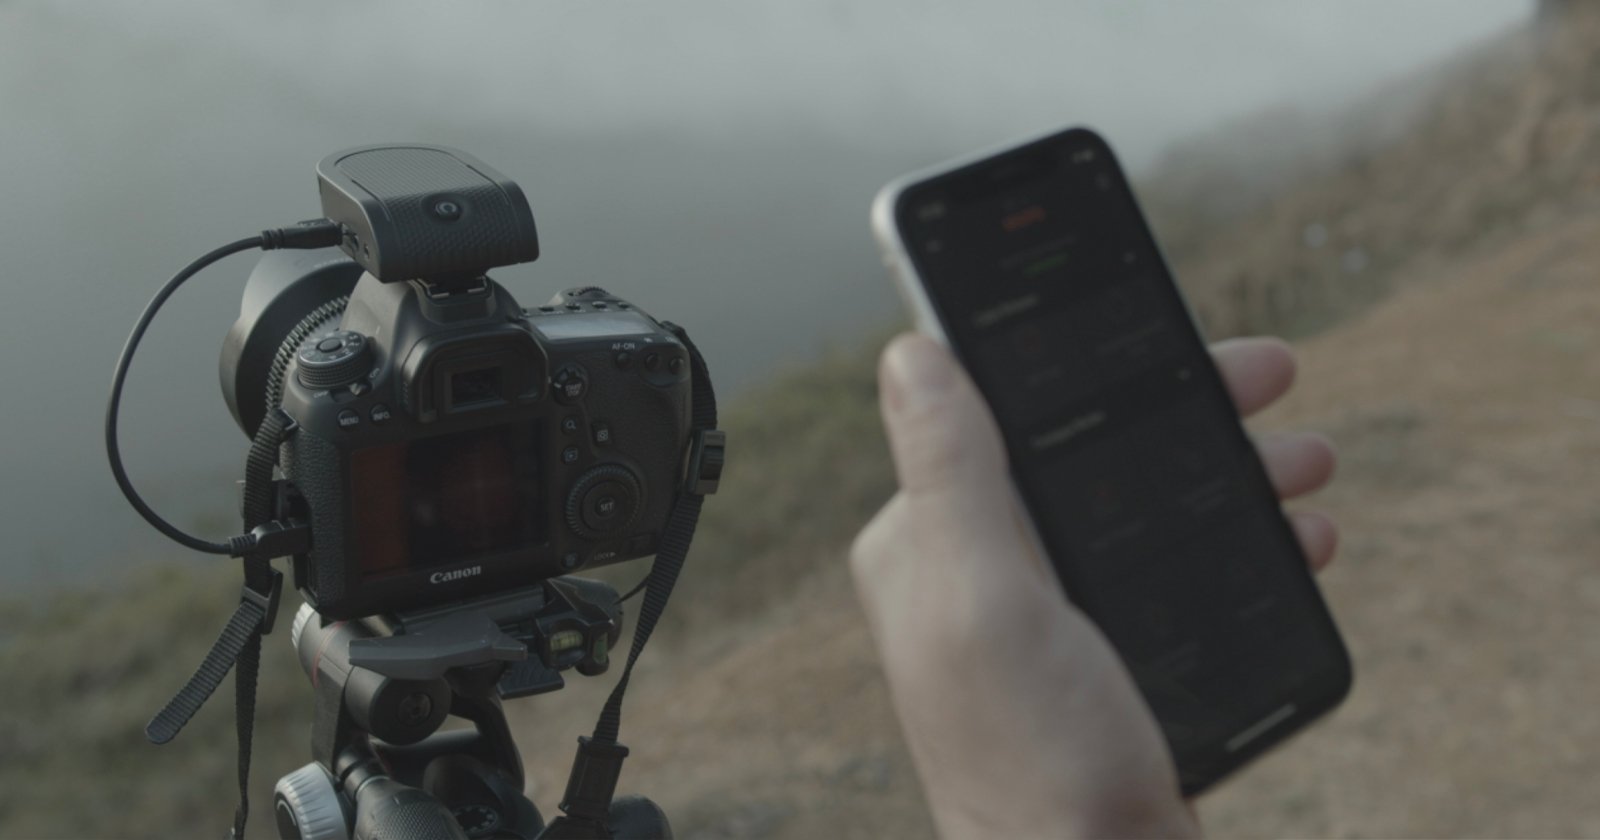 Ultimate Smart Gadget Automates Photography via System of Sensors